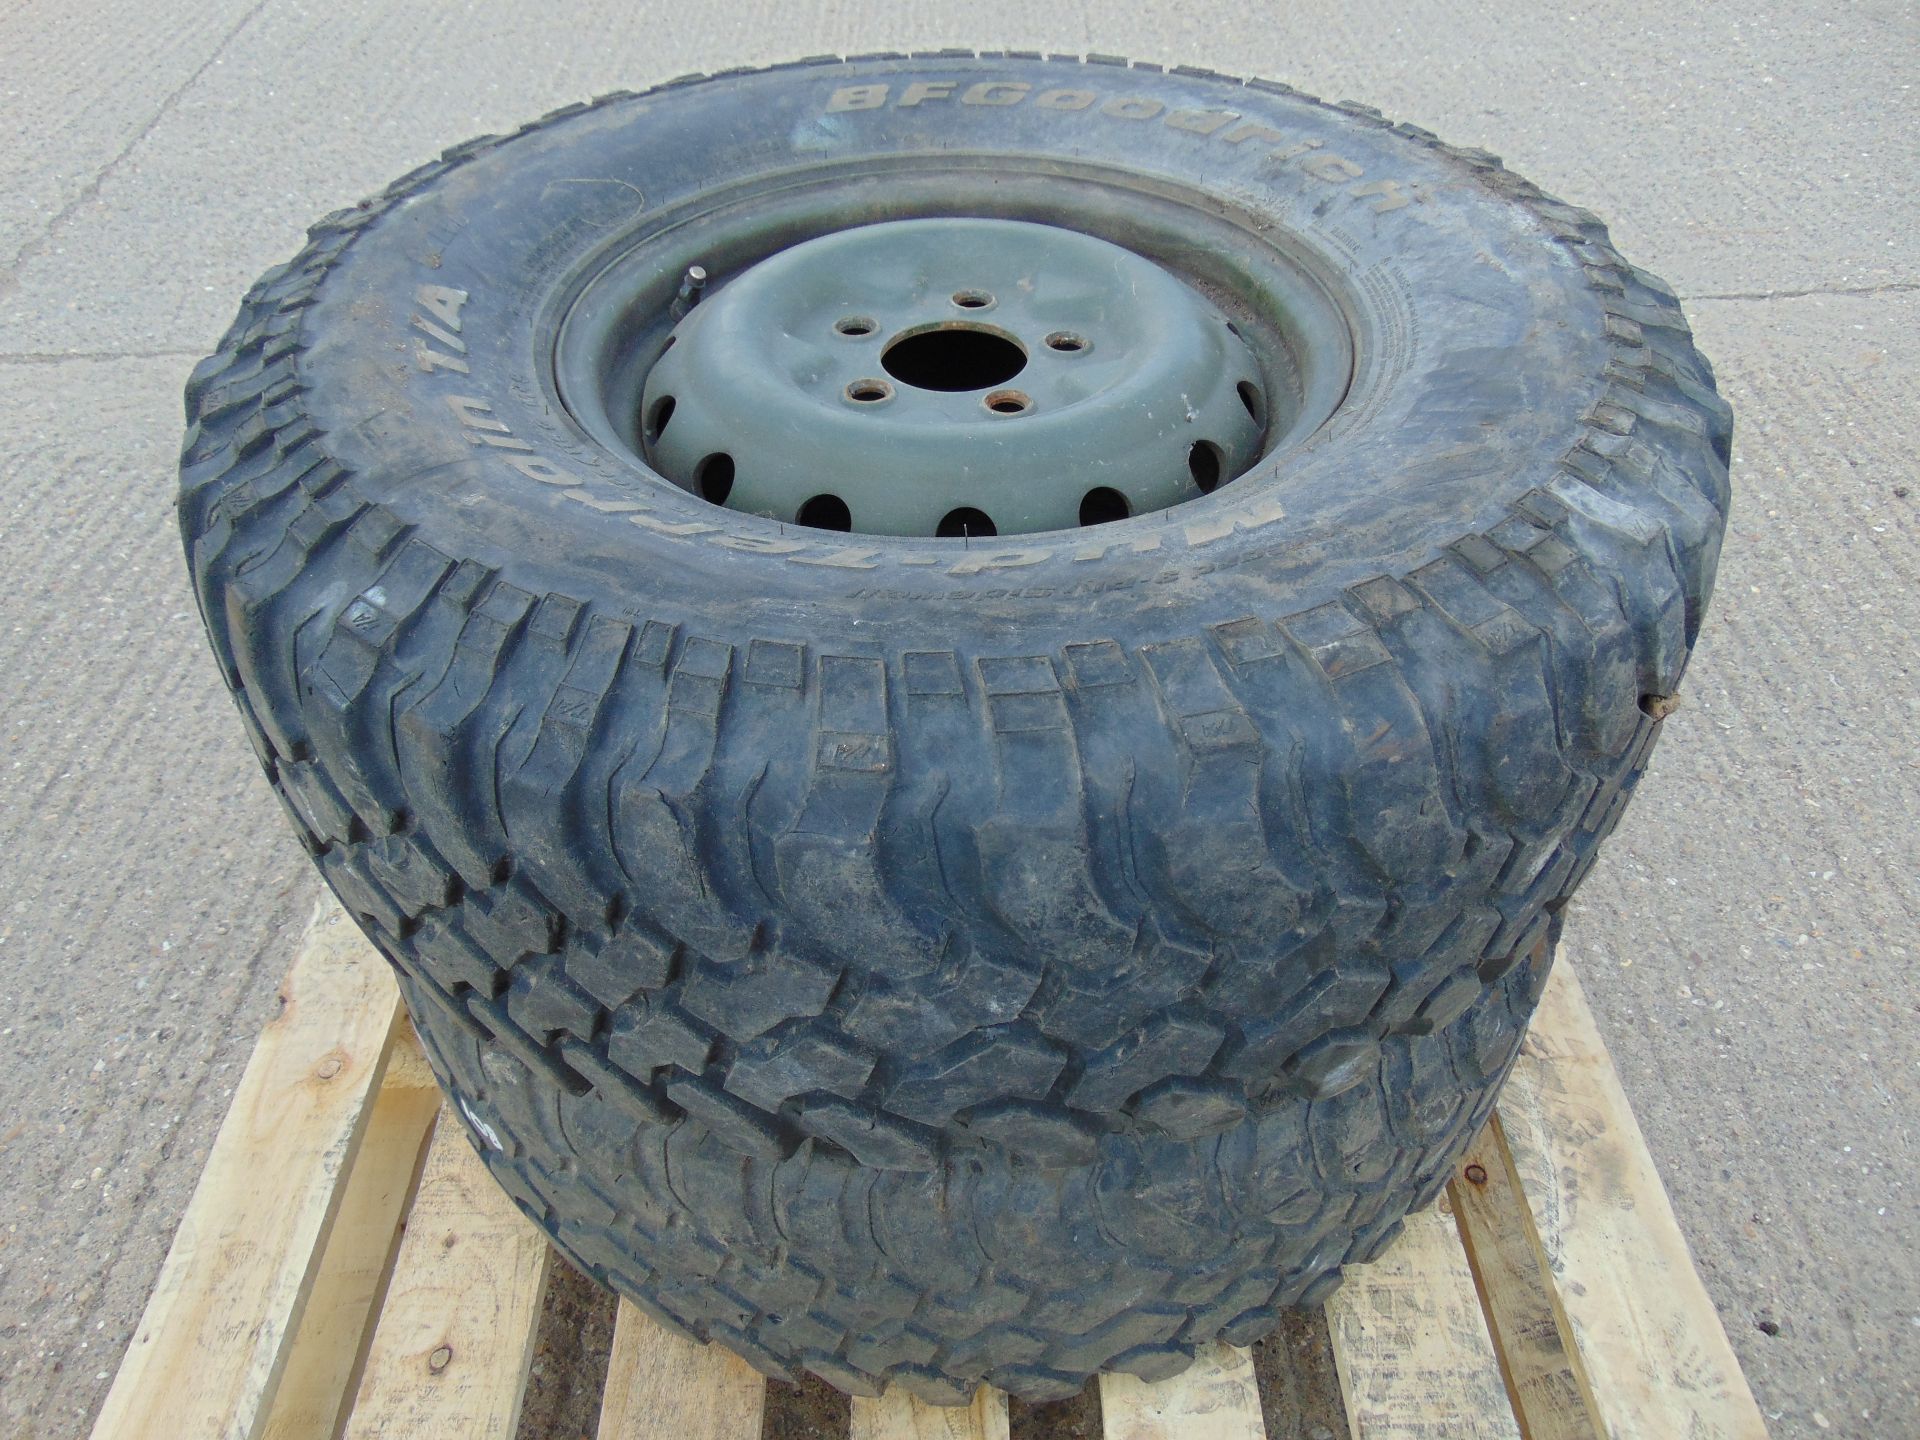 2 x BF Goodrich Mud Terrain TA LT 285/75 R16 Tyres complete with Rims